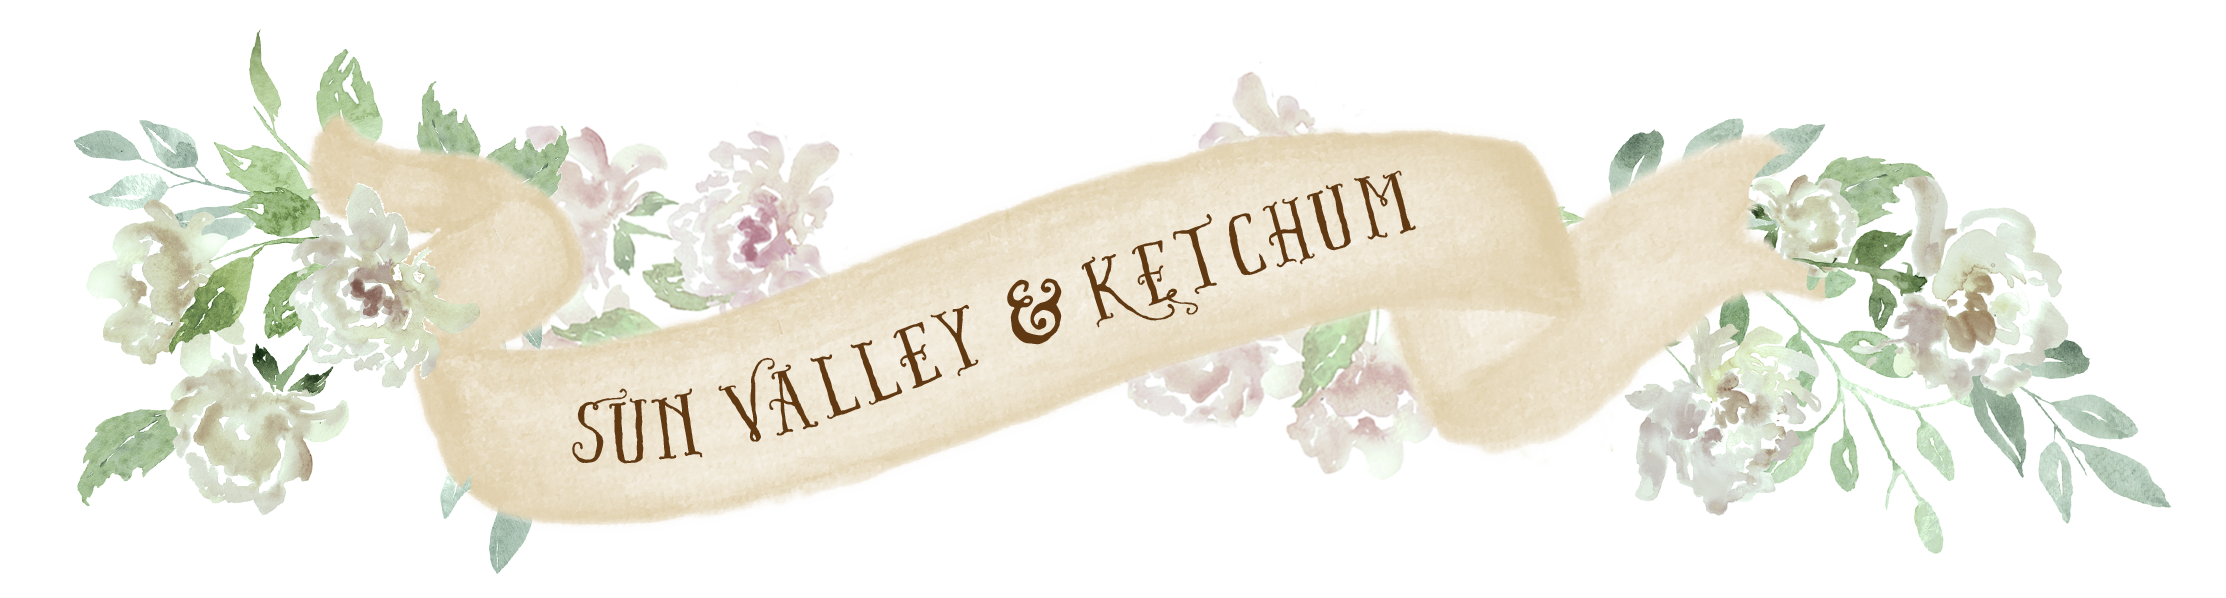 Sun Valley Ketchum Banner White Flowers downloadable artwork